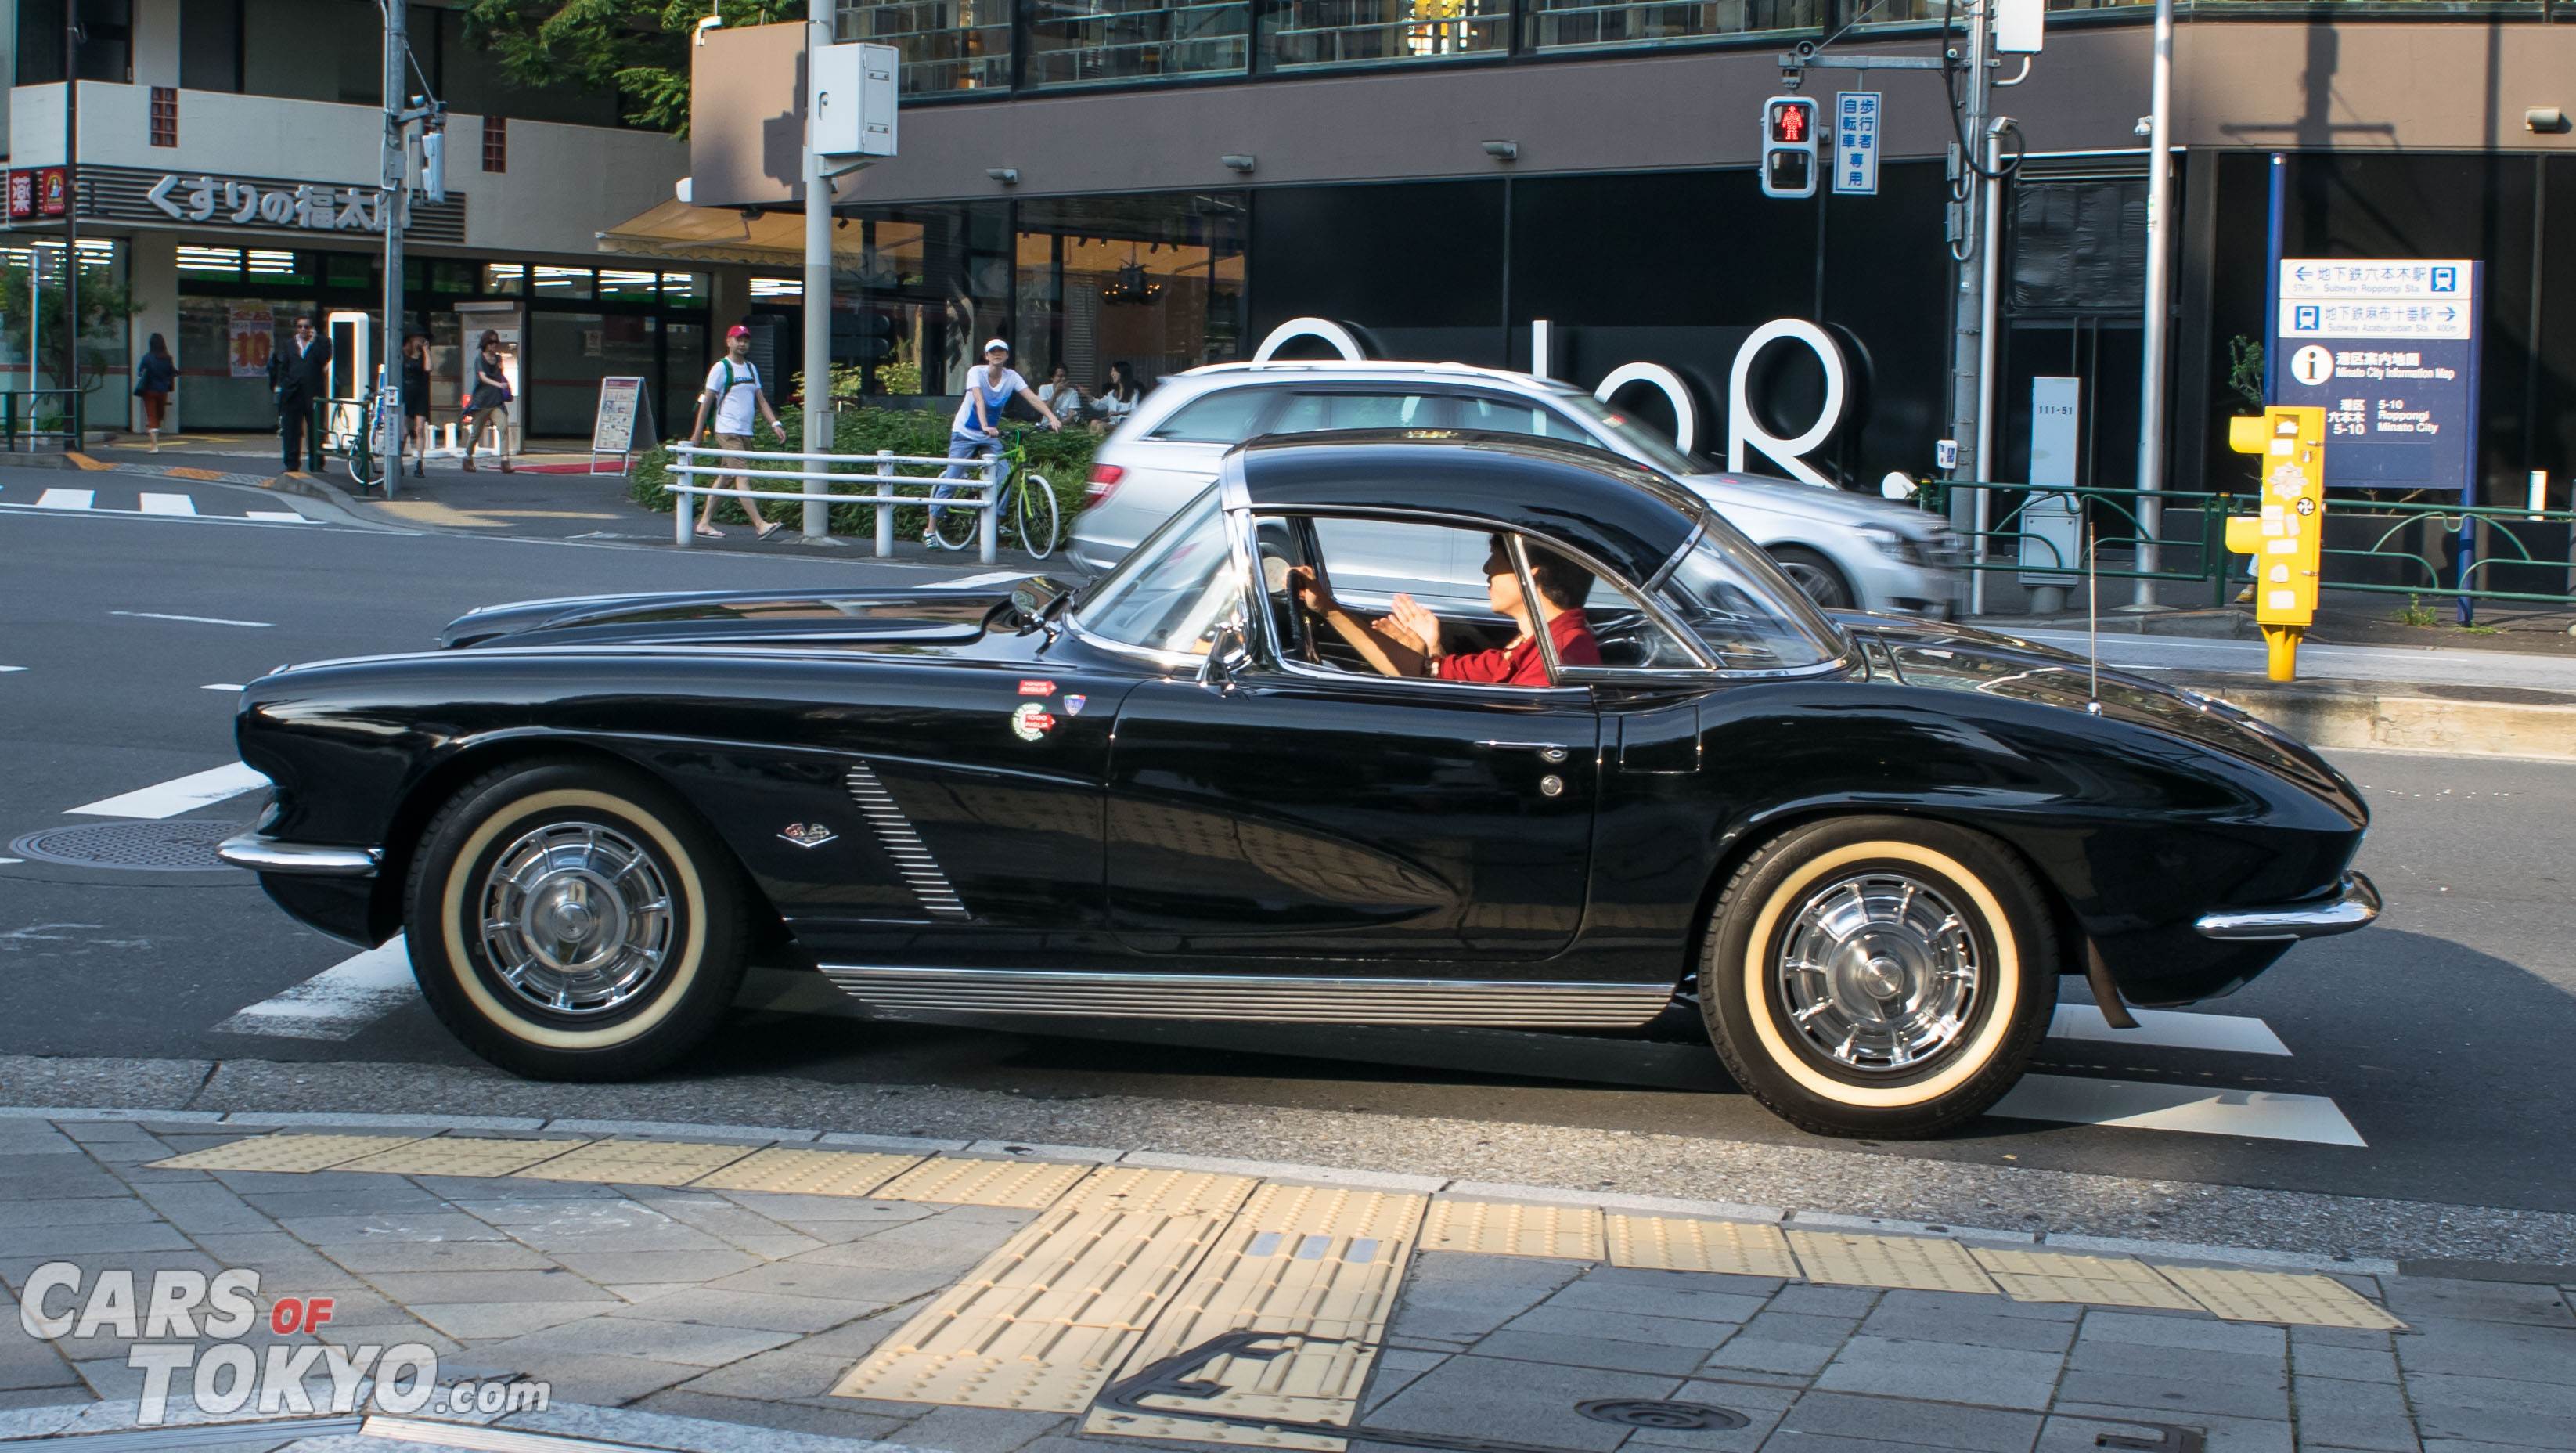 Cars of Tokyo Classic Corvette 